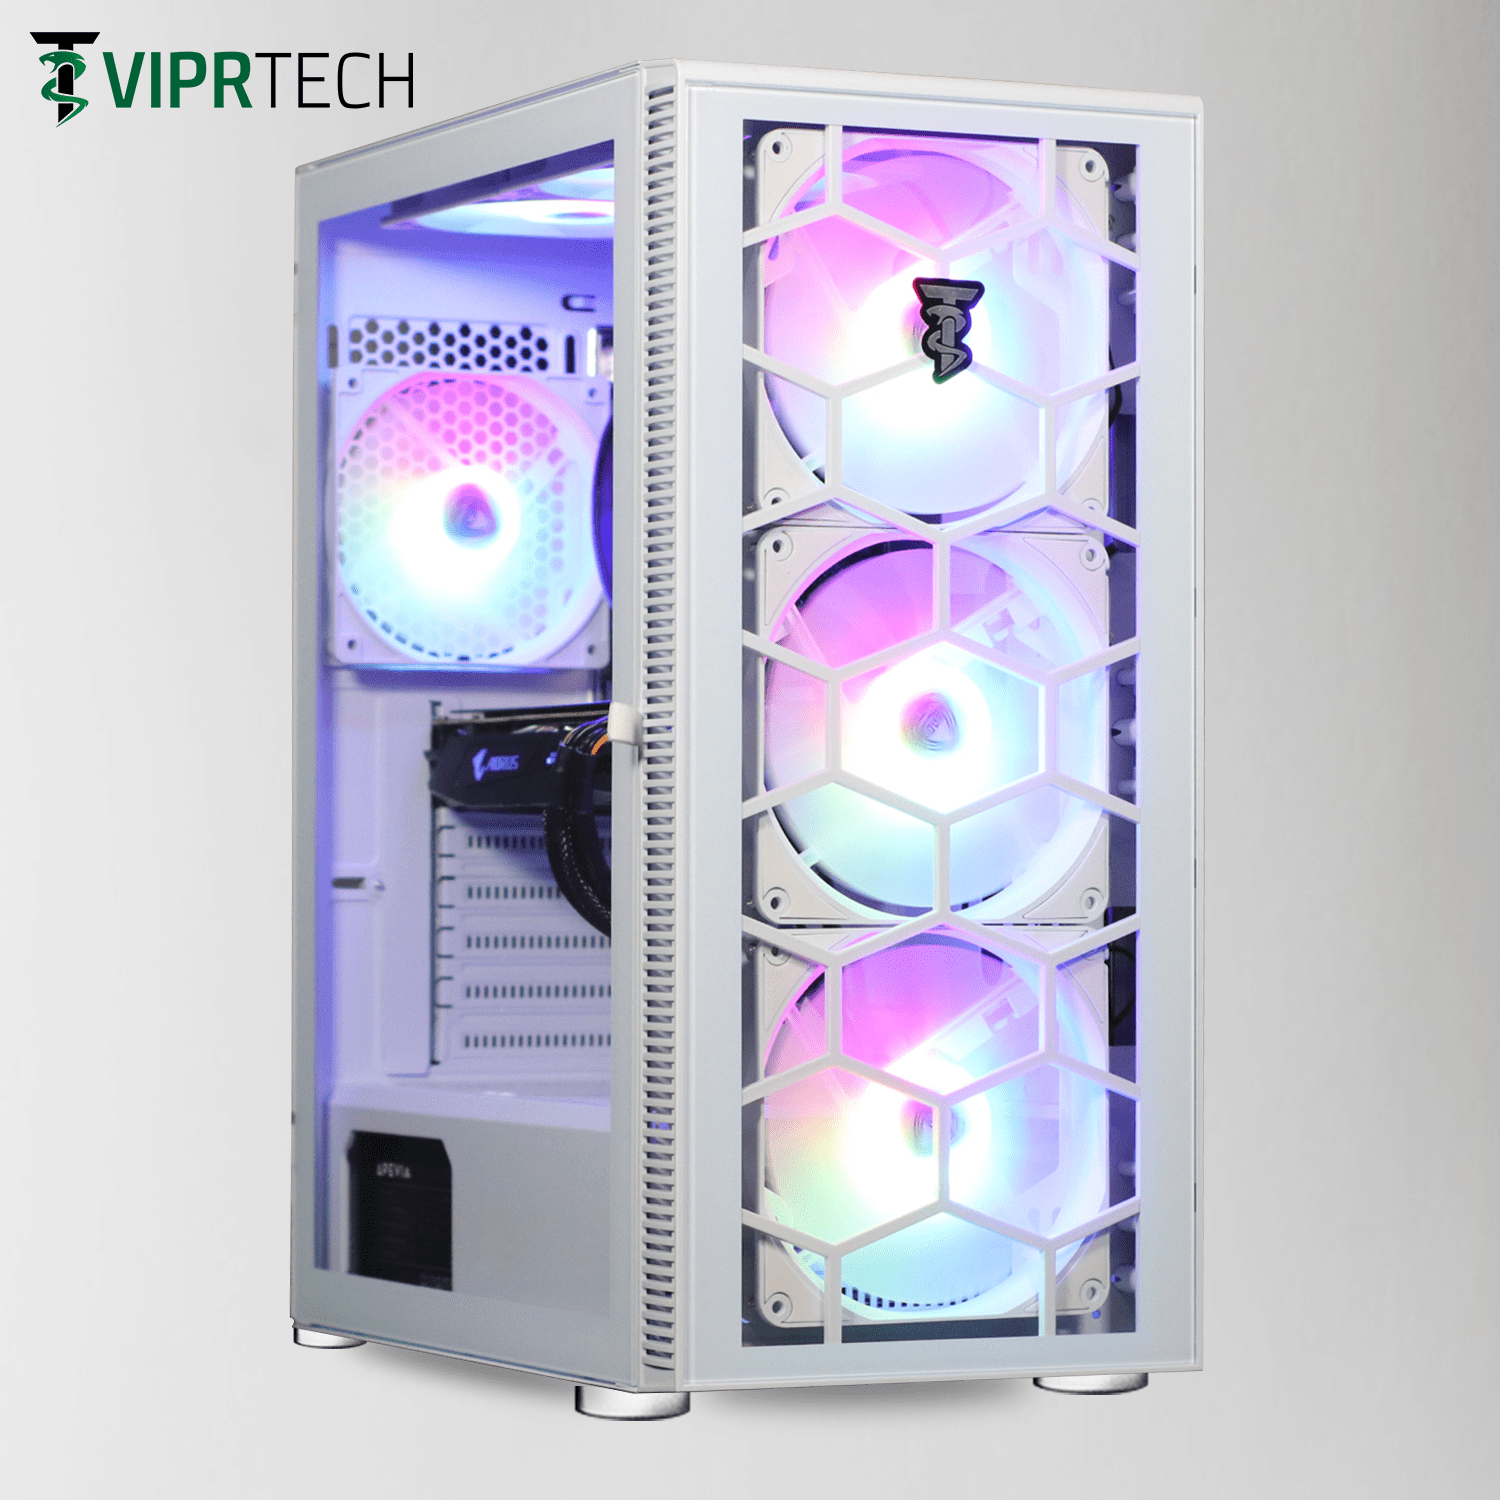 ViprTech.com Gaming PC Computer Desktop - AMD Ryzen 5 (12-LCore), NVIDIA GTX 1060 6GB, 8GB DDR4 RAM, 1TB HDD, VR-Ready, RGB, WiFi, 10 Pro - Walmart.com